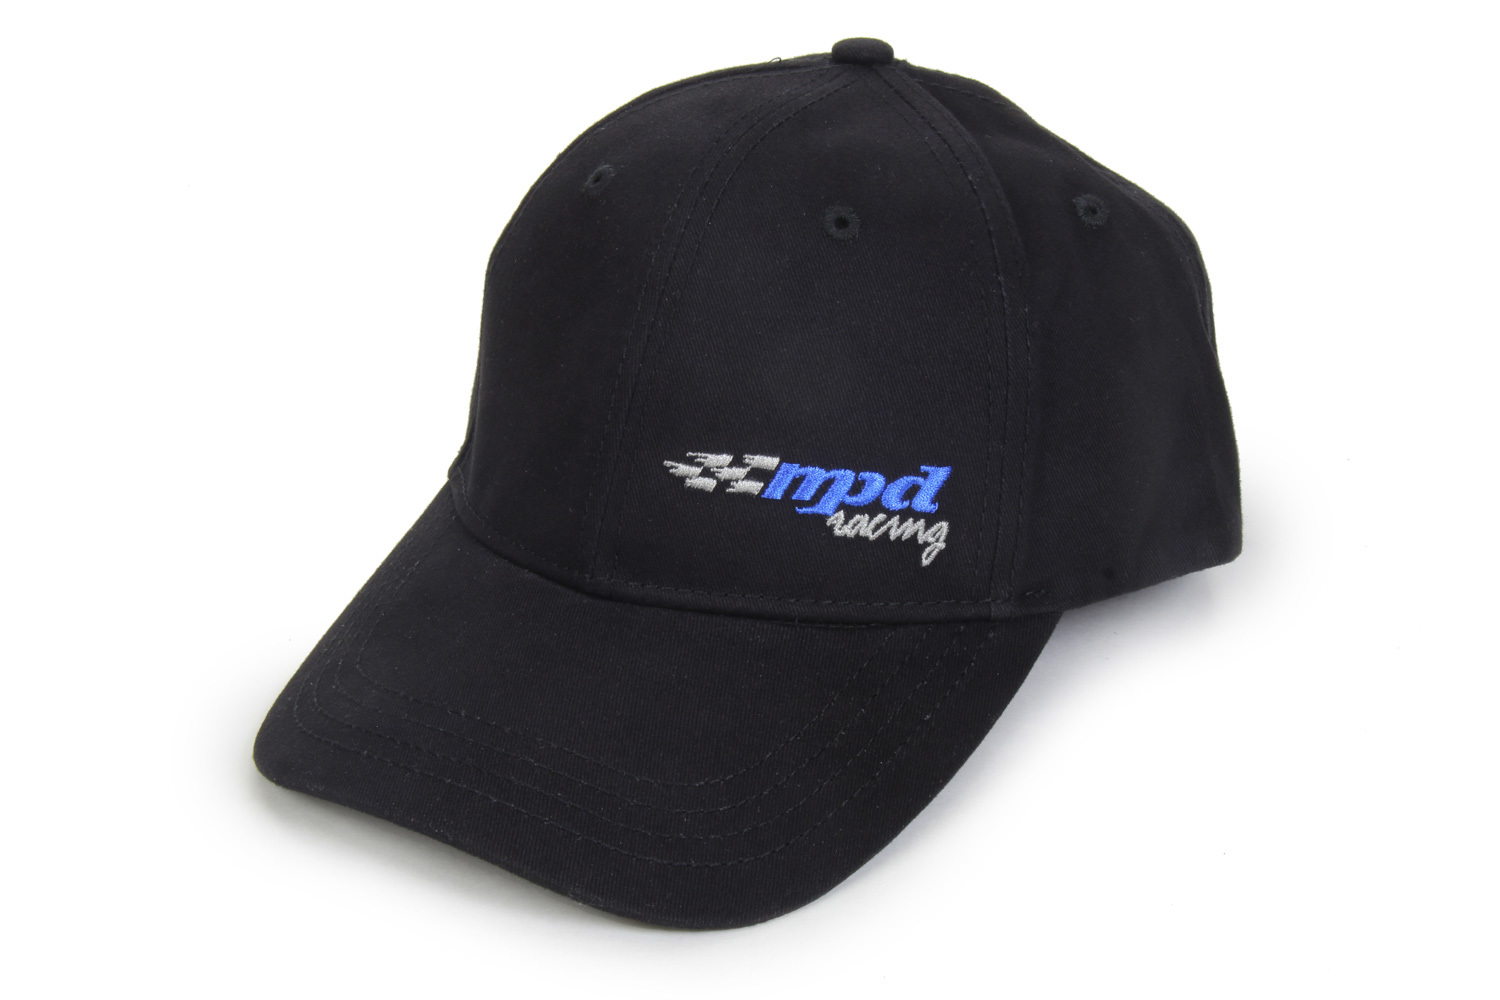 MPD Black Logo Hat Velcro Enclosure